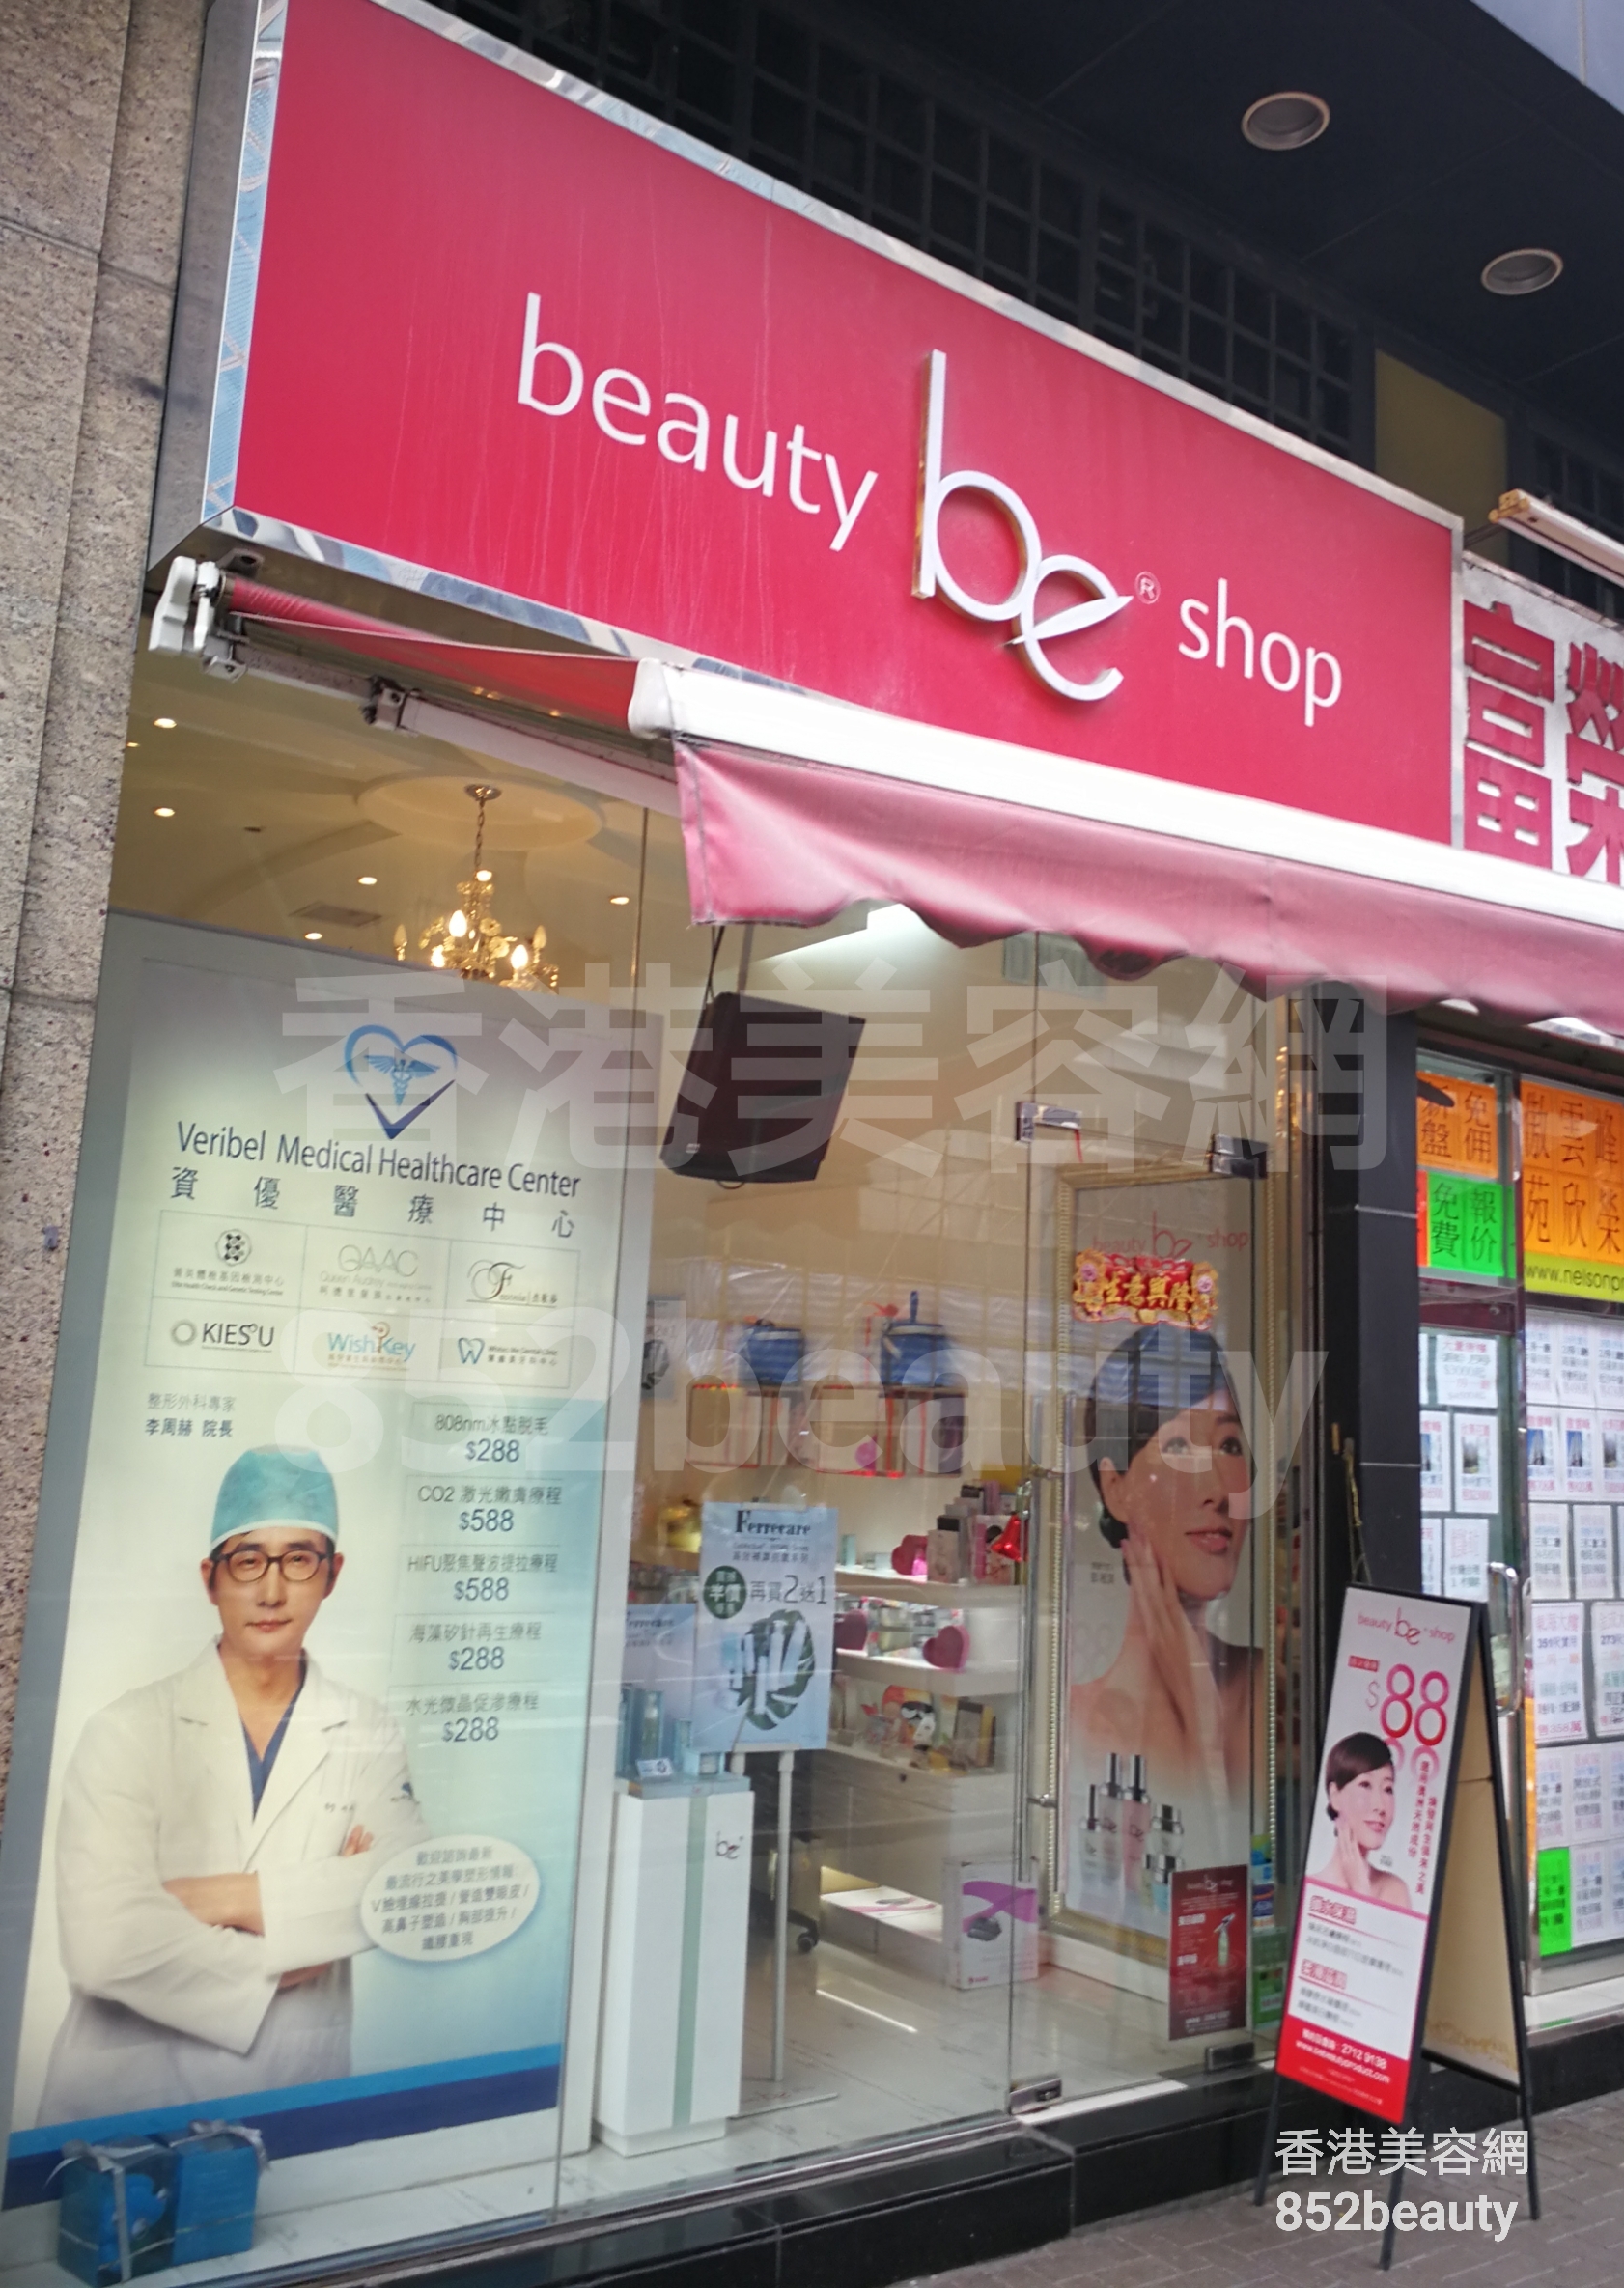 Facial Care: be beauty shop (金都豪庭)